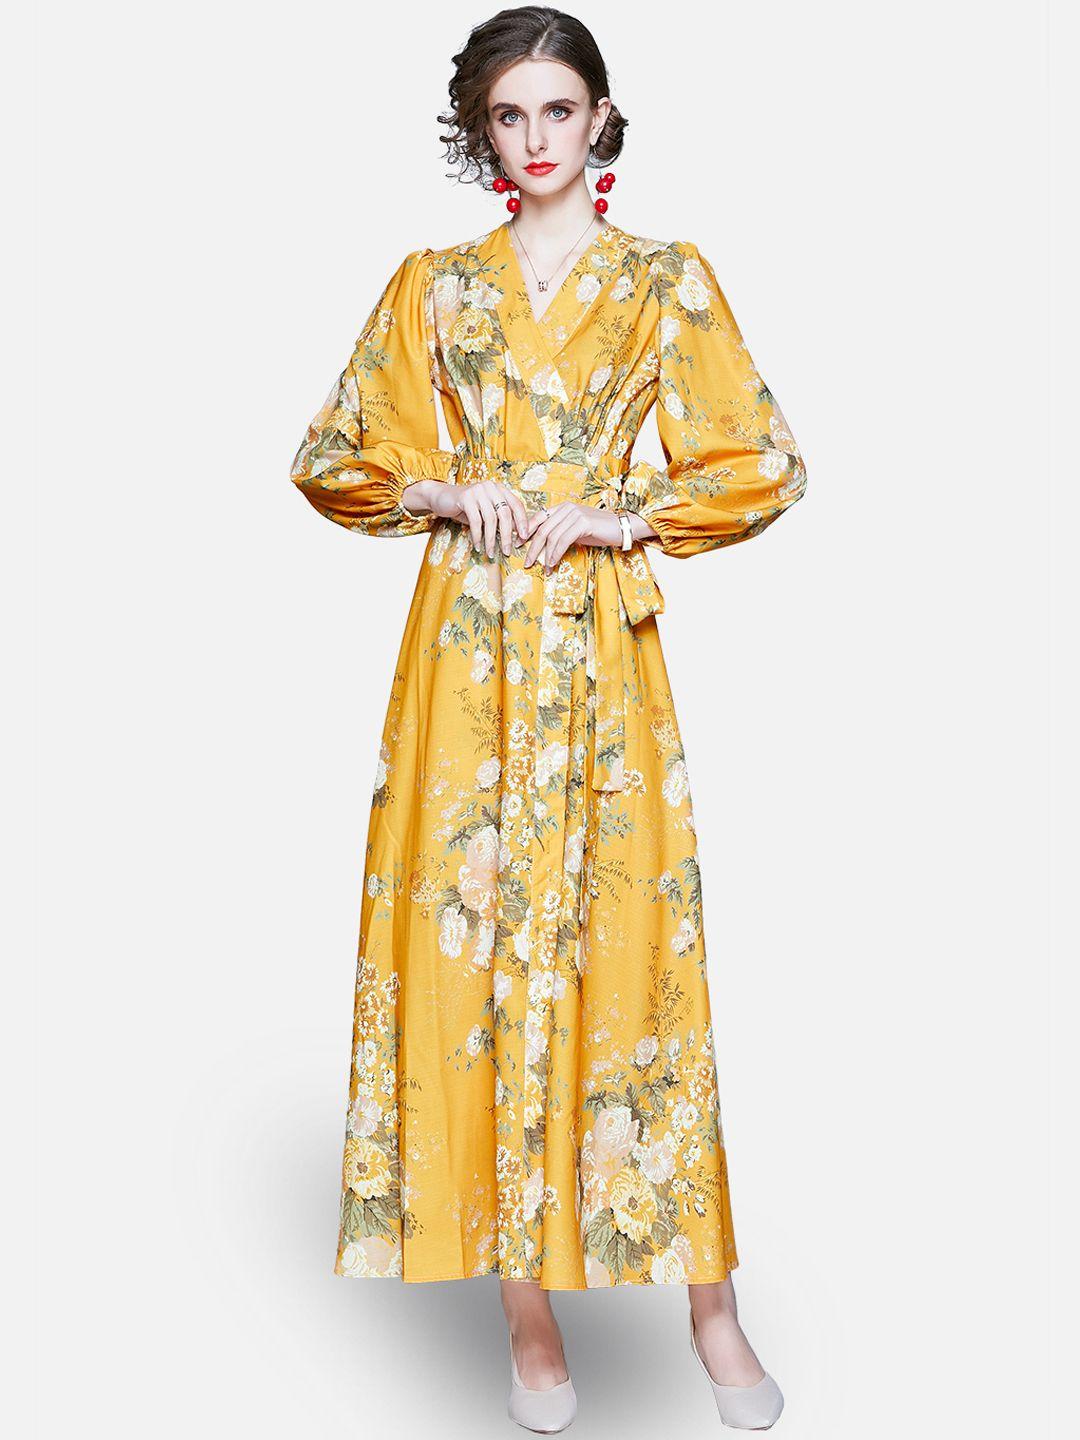 jc collection women yellow & white floral maxi dress